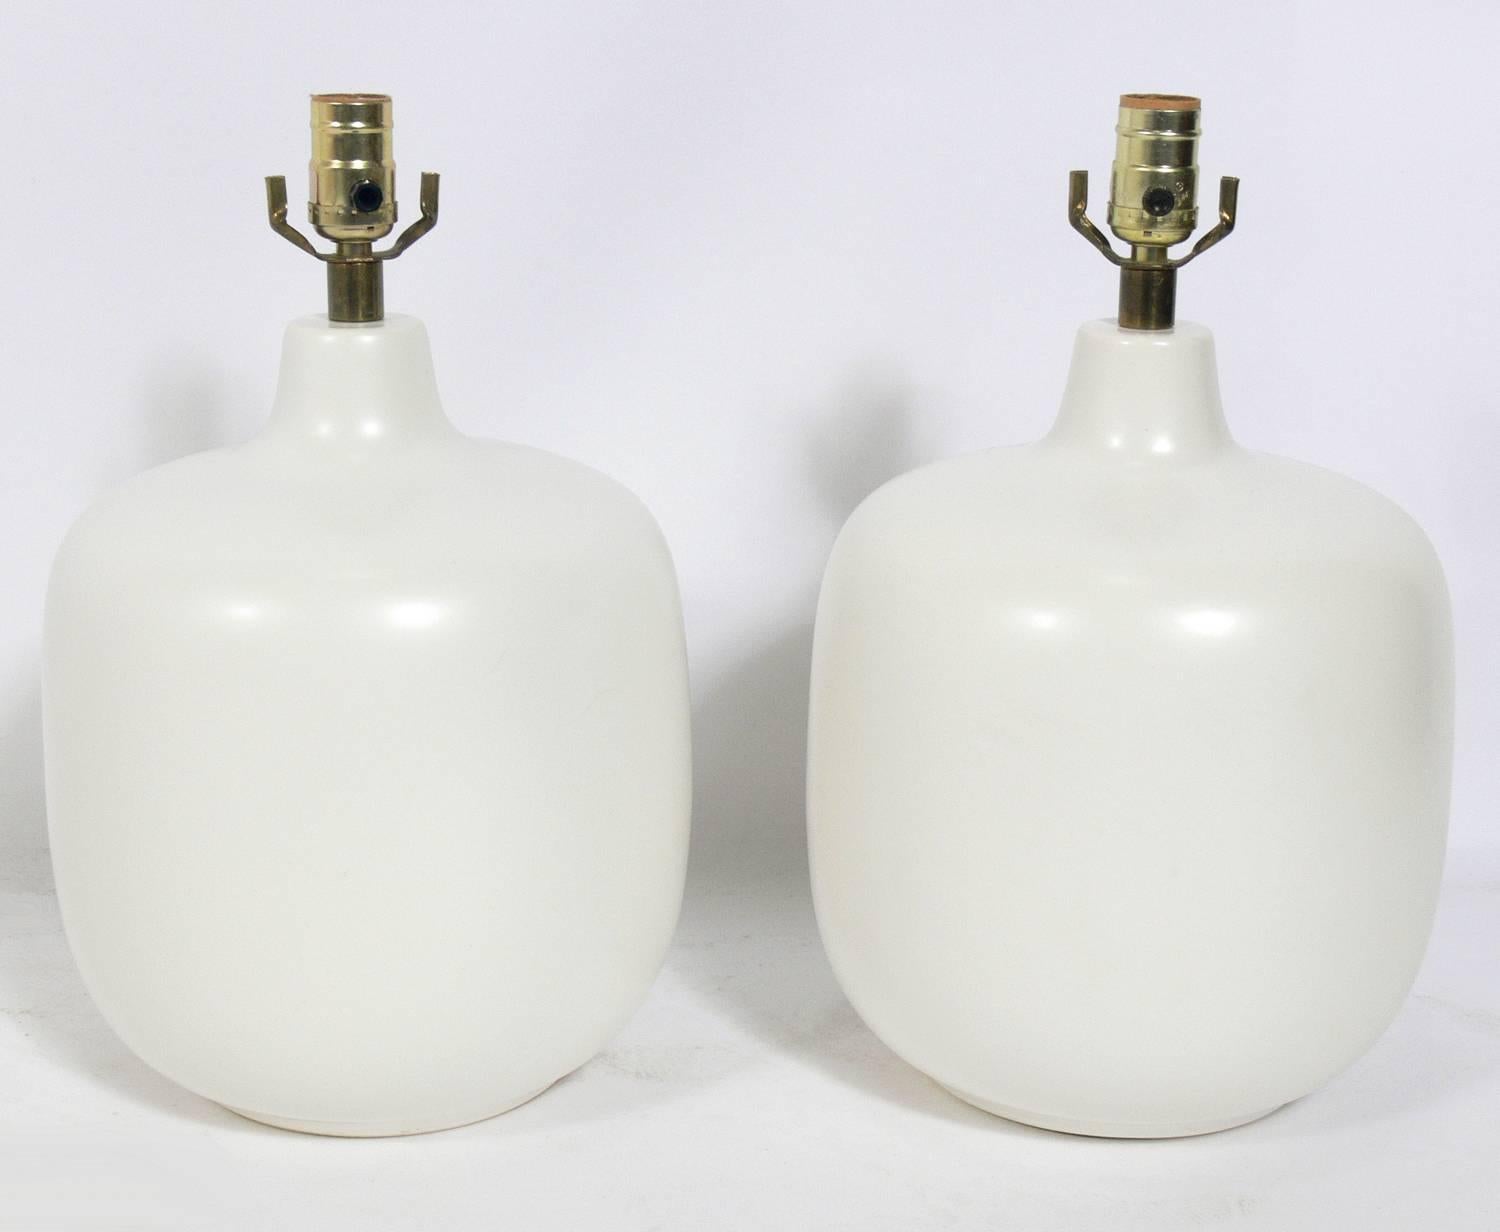 Pair of Danish modern ceramic lamps by Lotte and Gunnar Bostlund, Denmark, circa 1960s. They retain their original jute wrapped fiberglass shades.